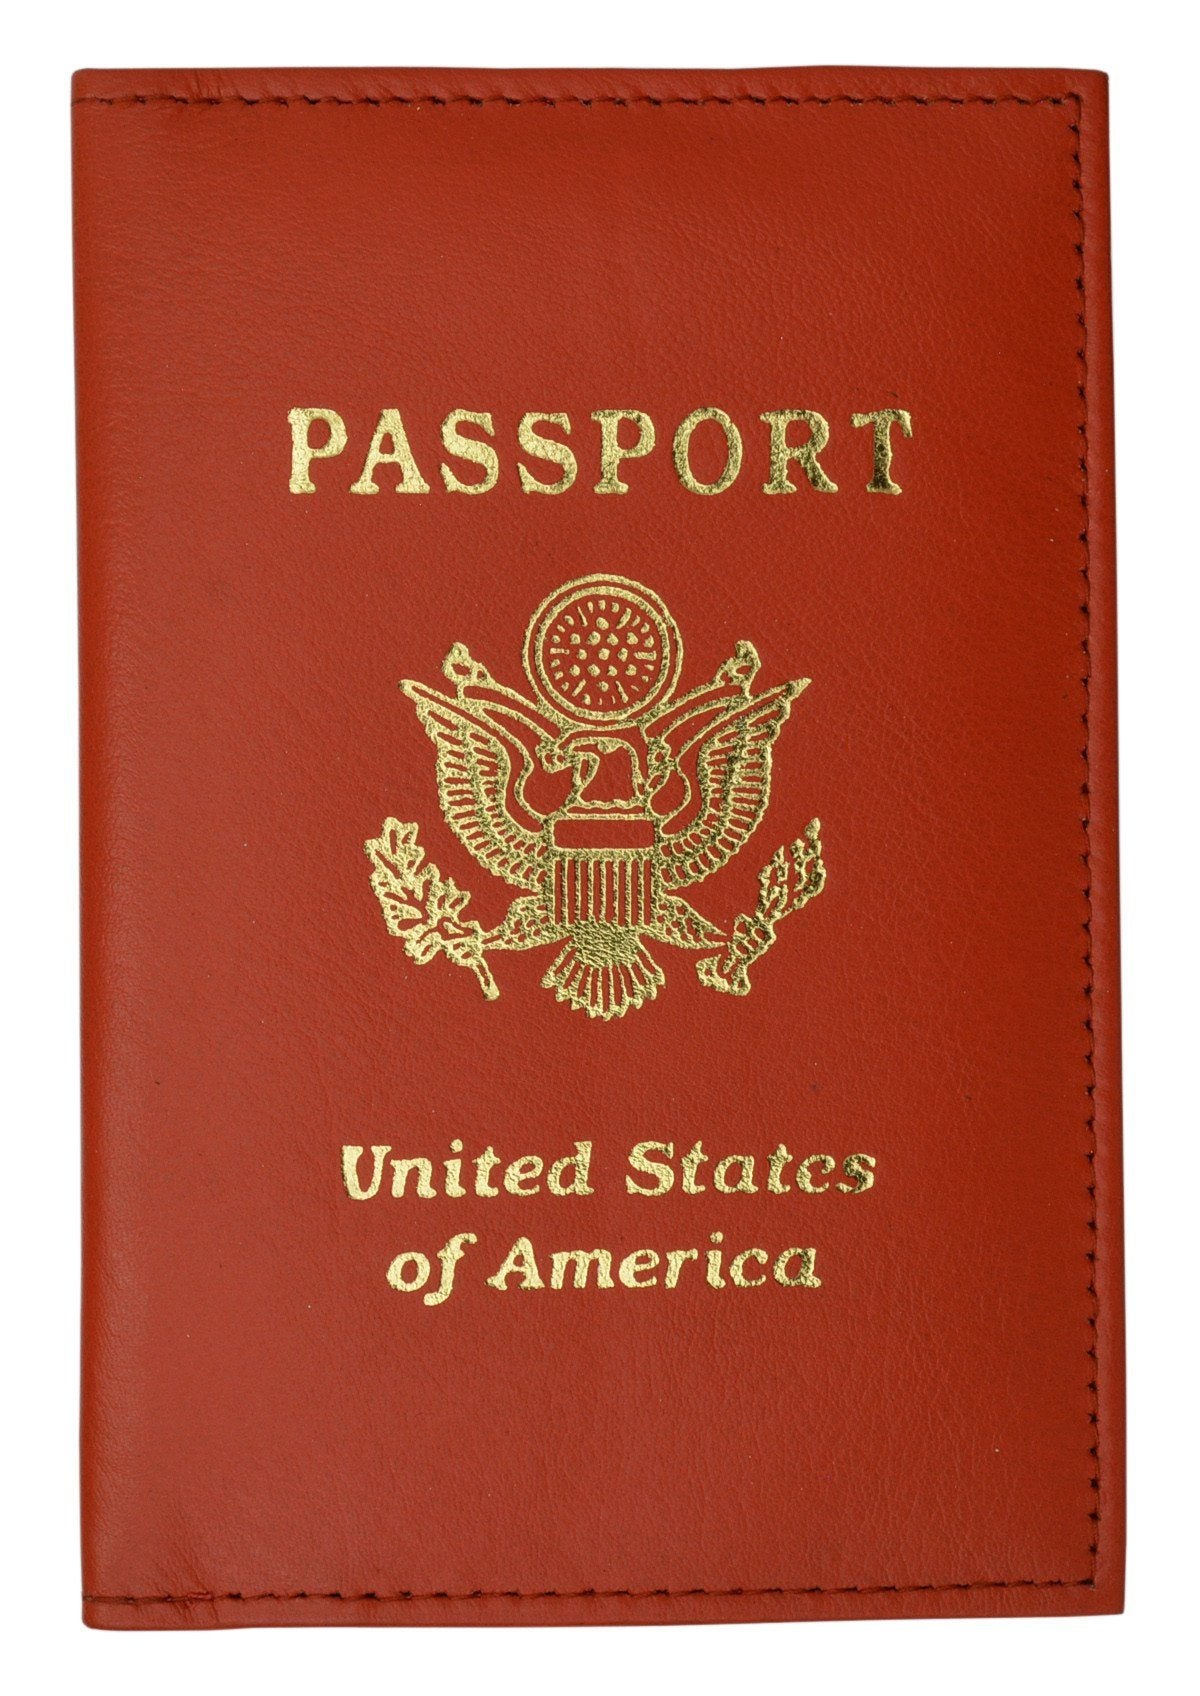 Vegan Leather USA Logo Passport Holder - Yellow